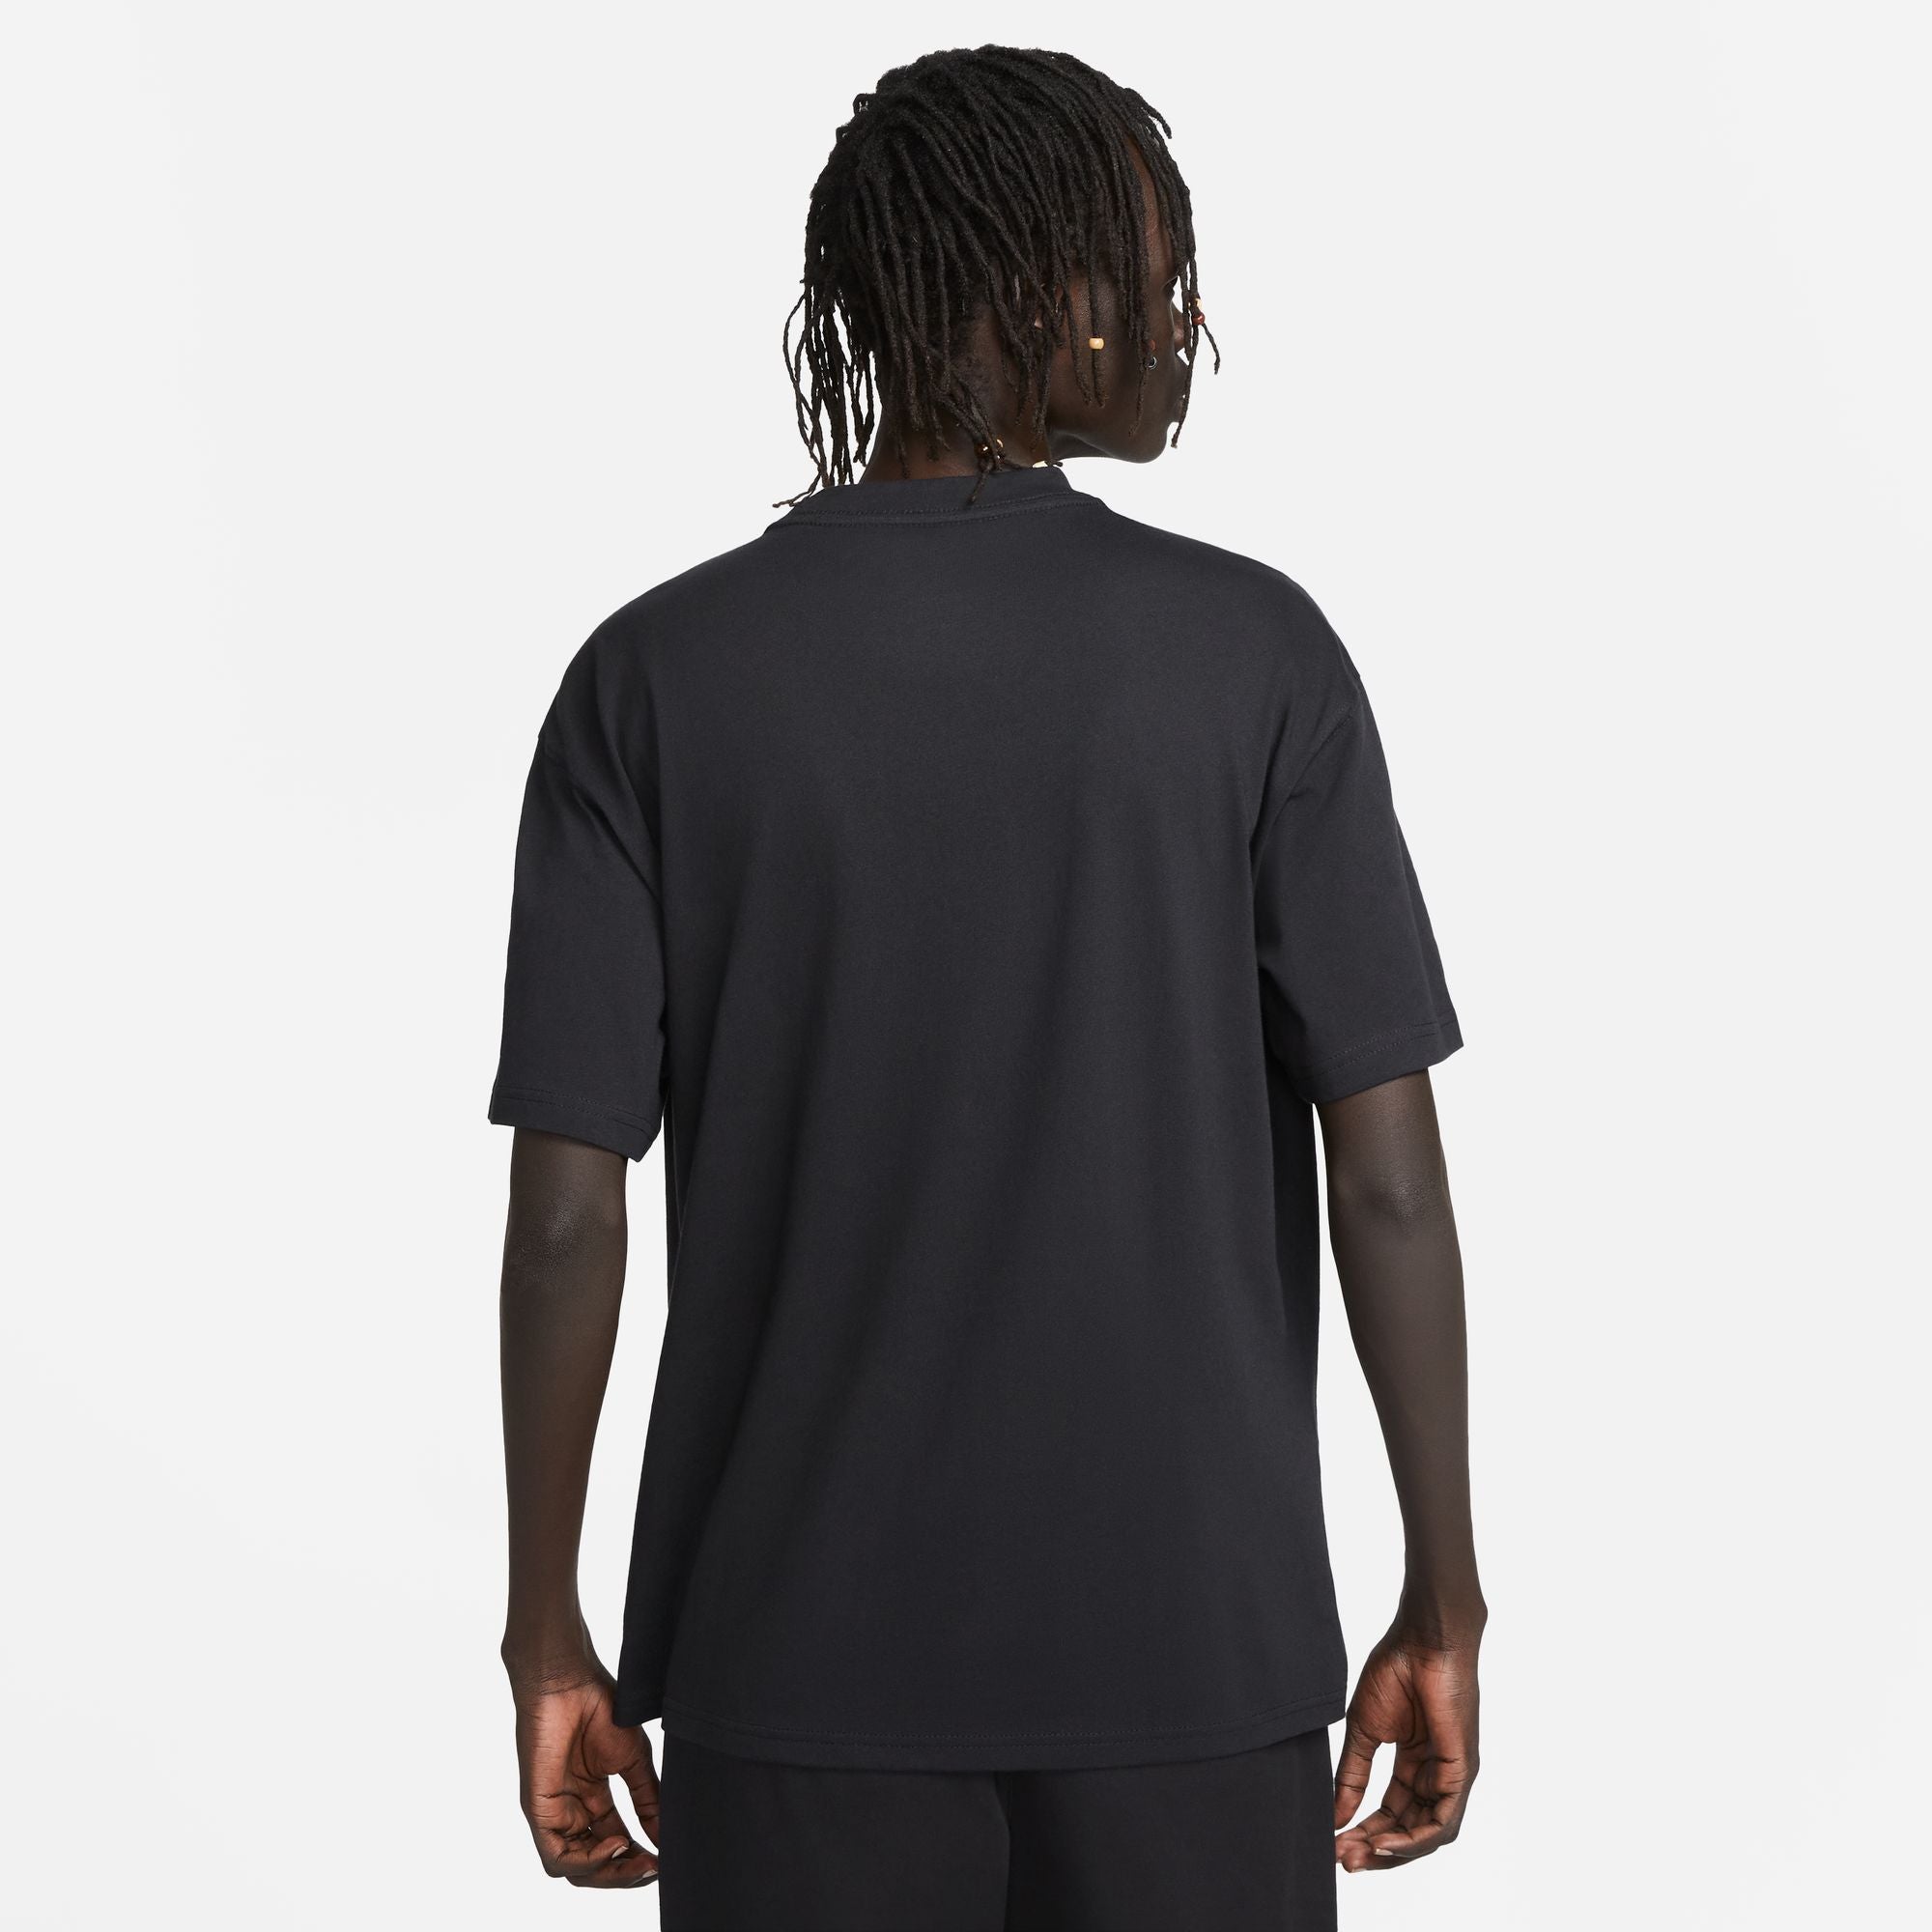 Nike Air T-shirt - Black/Blue